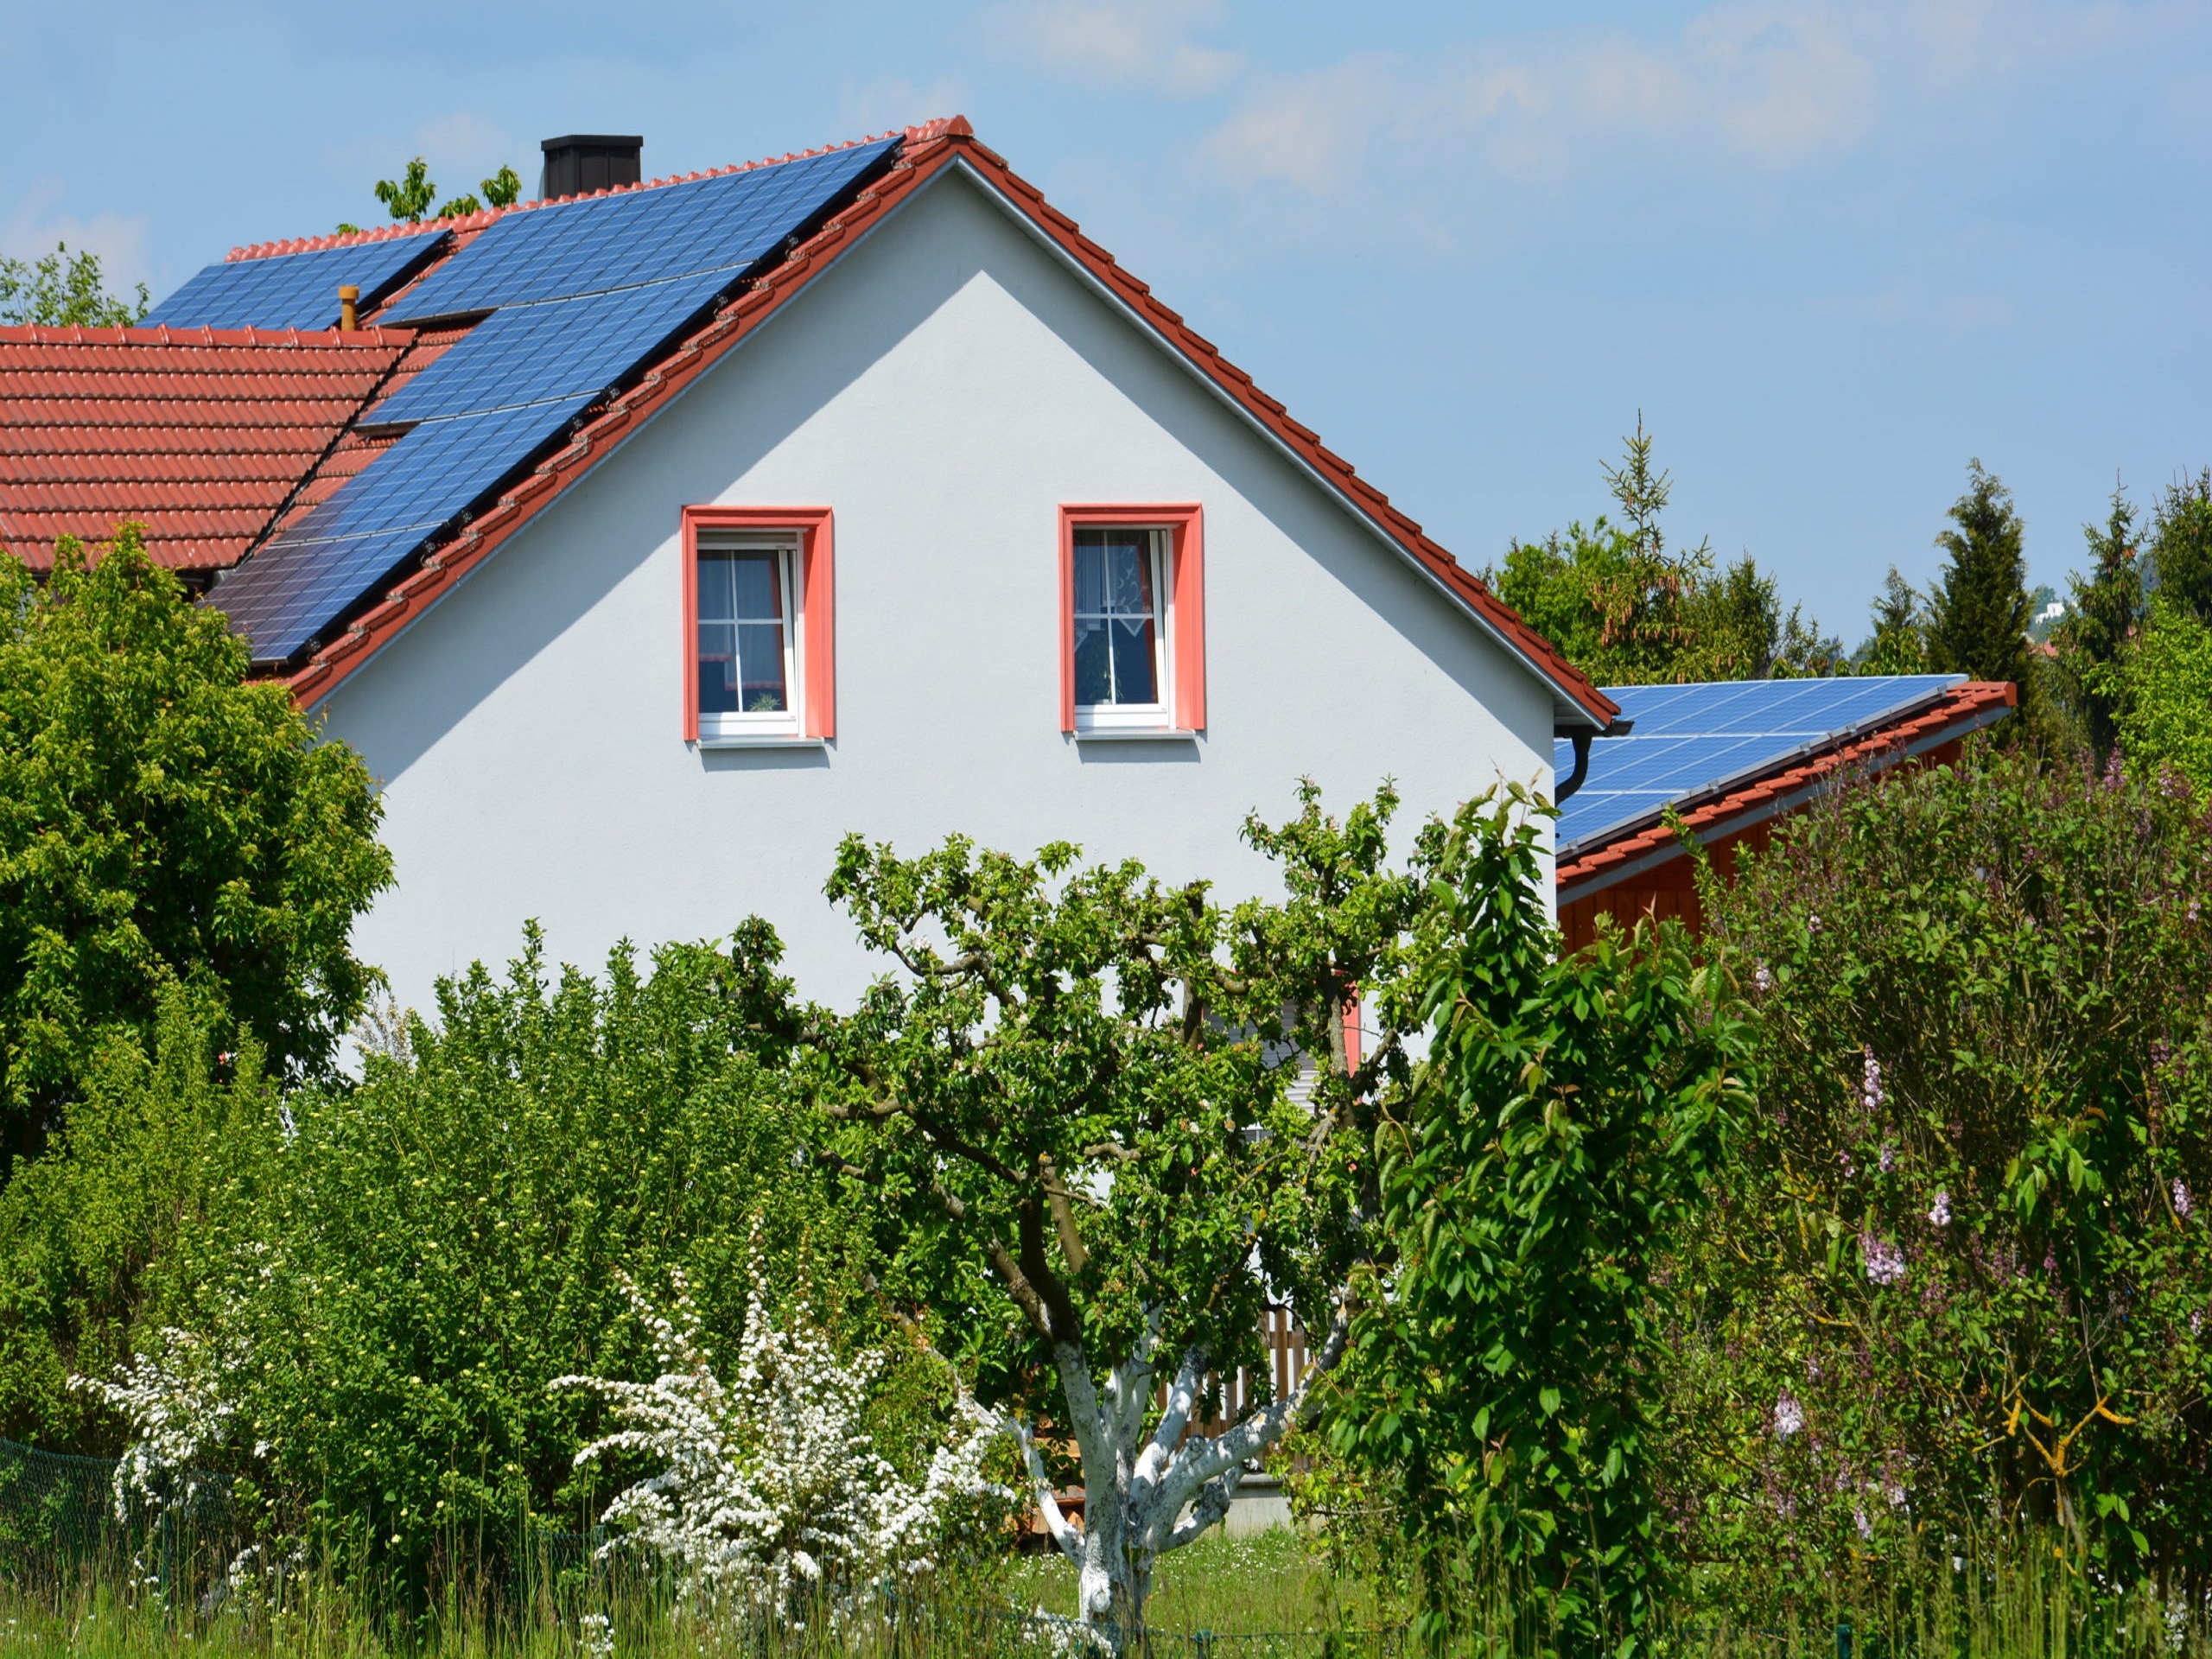 C.A.R.M.E.N. e.V. informiert über Photovoltaik auf dem Eigenheim